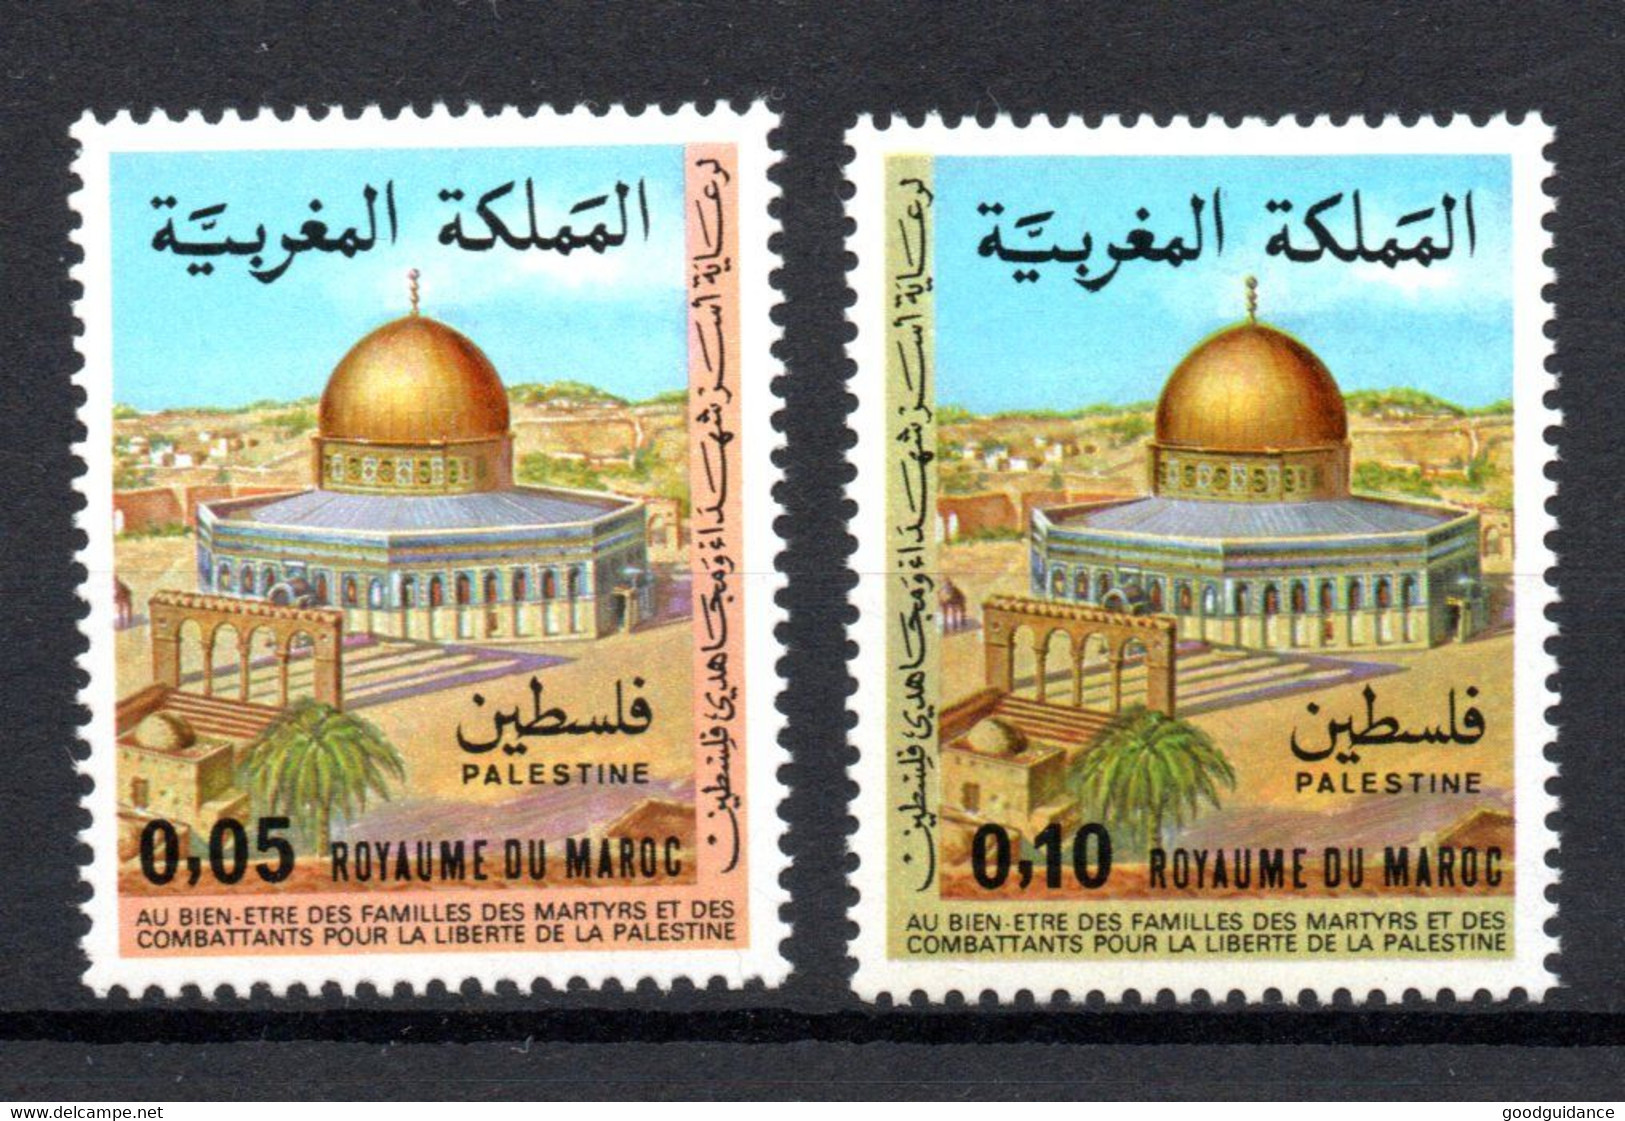 1978 - Morocco- Maroc- Palestinian  Solidarity- Soutien Aux Palestiniens- Dome- Jerusalem- El Quds-  Set 2v.MNH** - Mosques & Synagogues